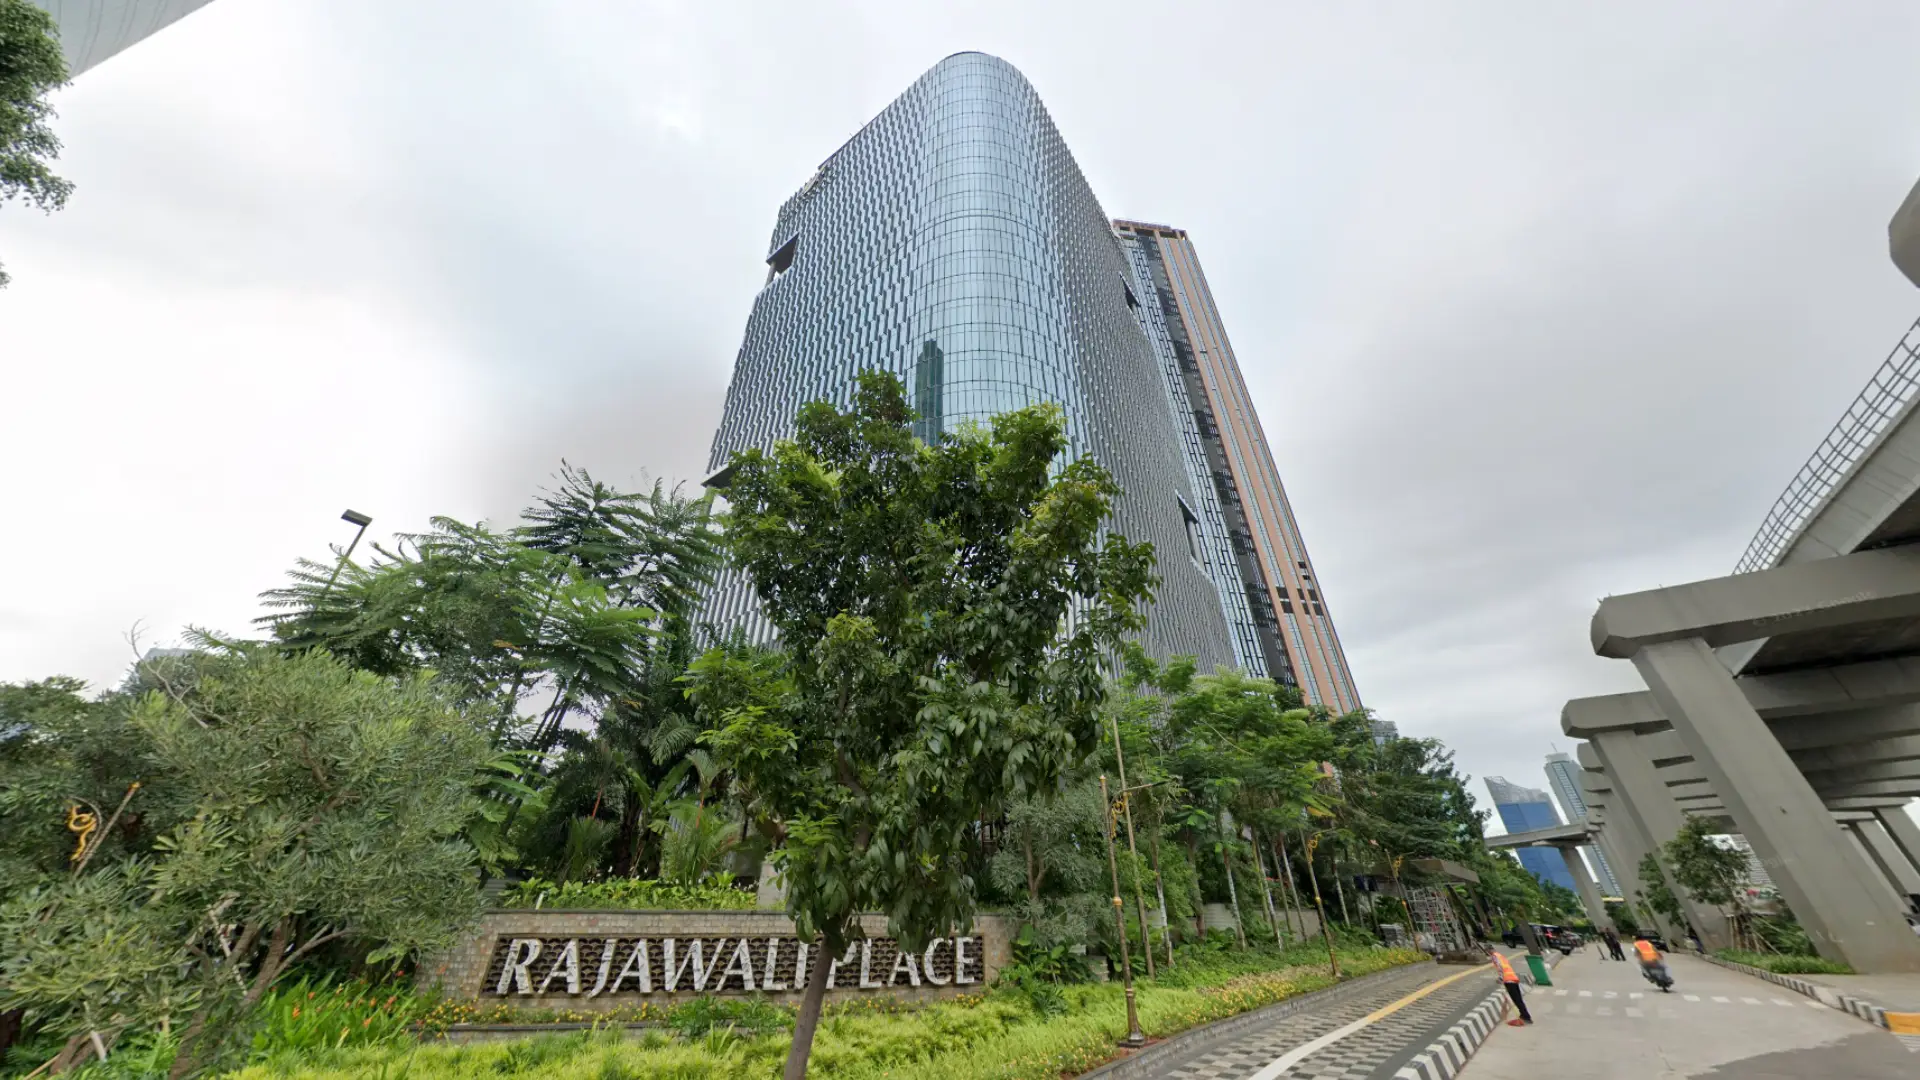 Rajawali Place / The St. Regis Office Tower